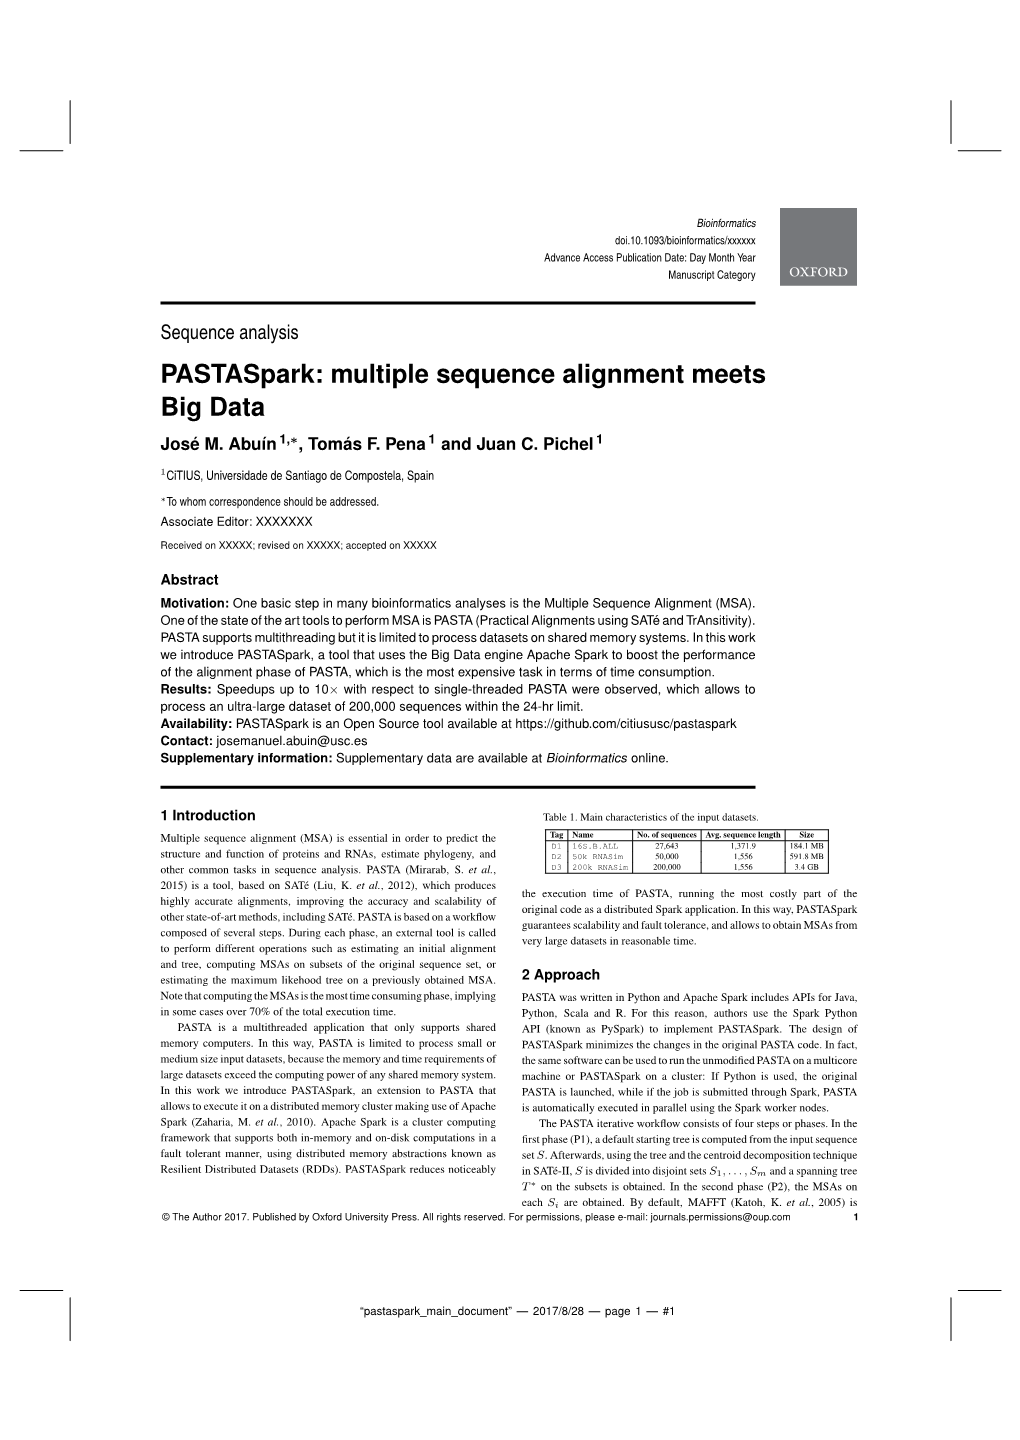 Pastaspark: Multiple Sequence Alignment Meets Big Data José M